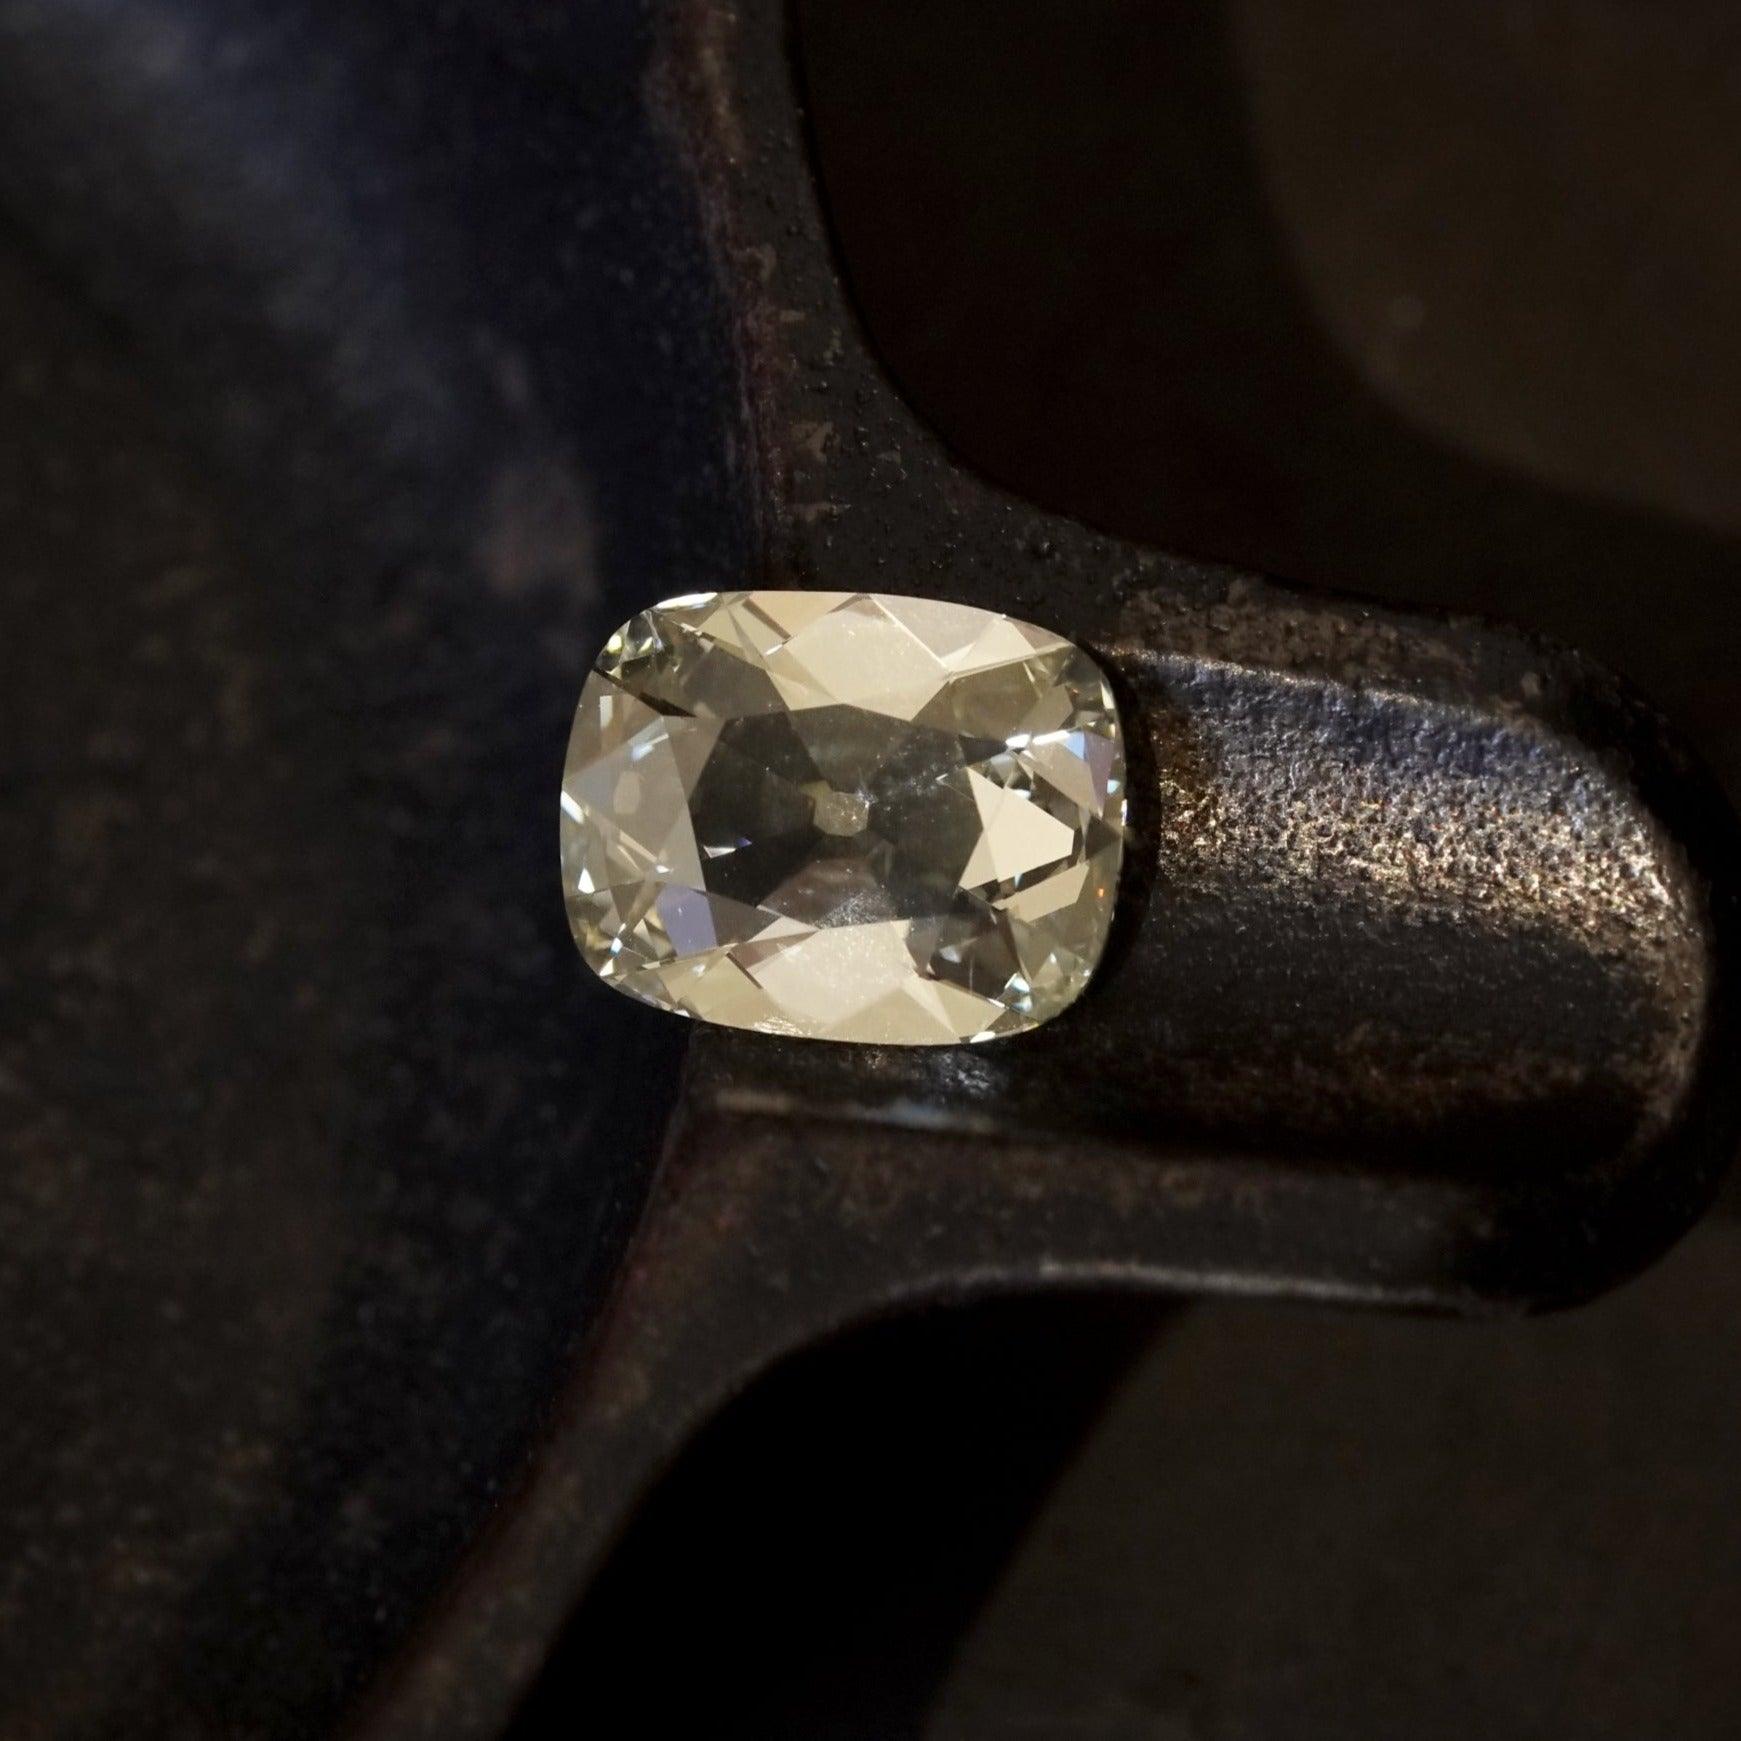 4.01-Carat Cushion Cut Diamond by Jogani - Front View